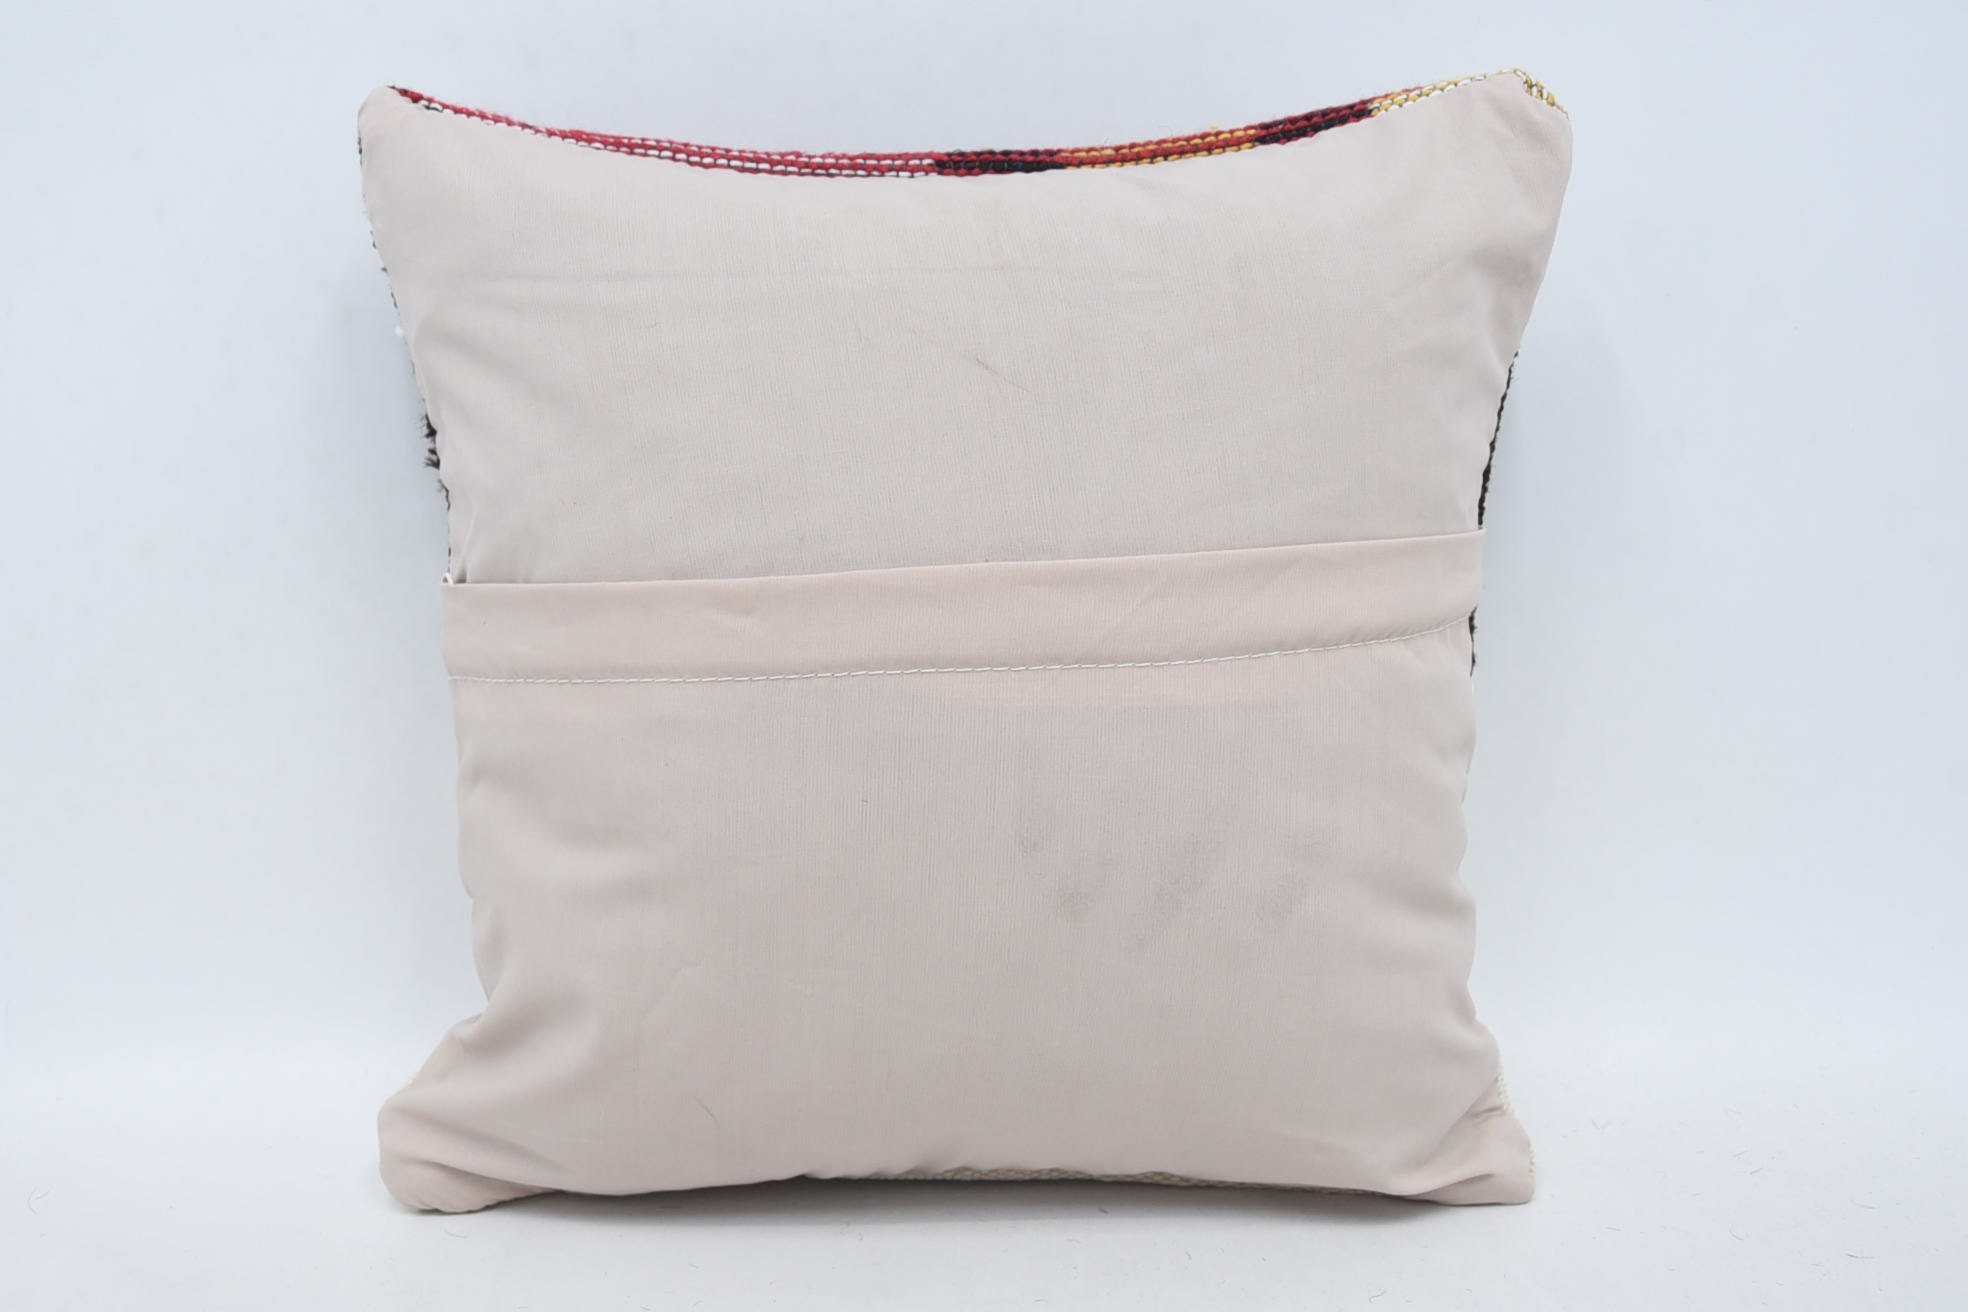 Antique Pillows, Boho Pillow, 14"x14" White Pillow Case, Wholesale Cushion, Decorative Throw Pillow Sham, Kilim Pillow Cover